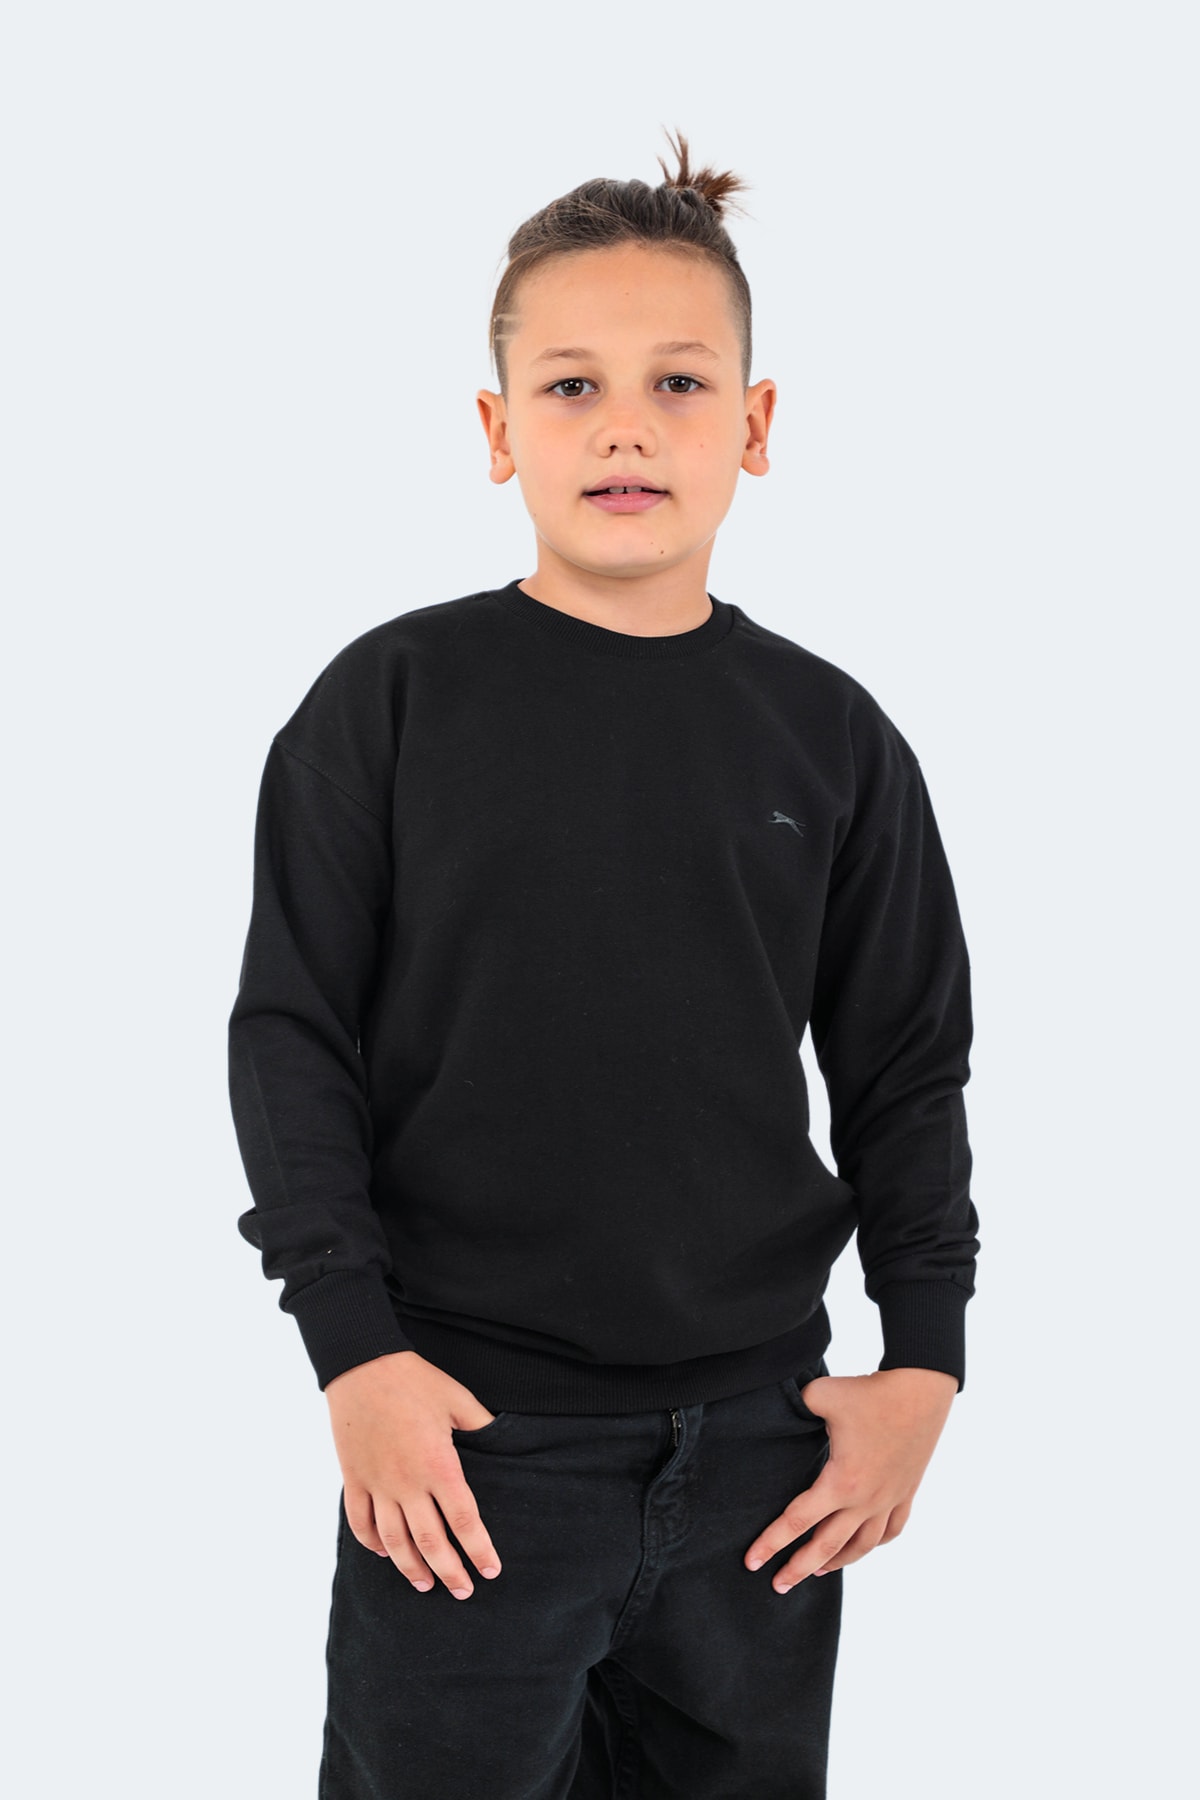 Slazenger Dna Unisex Kids Sweatshirt Black